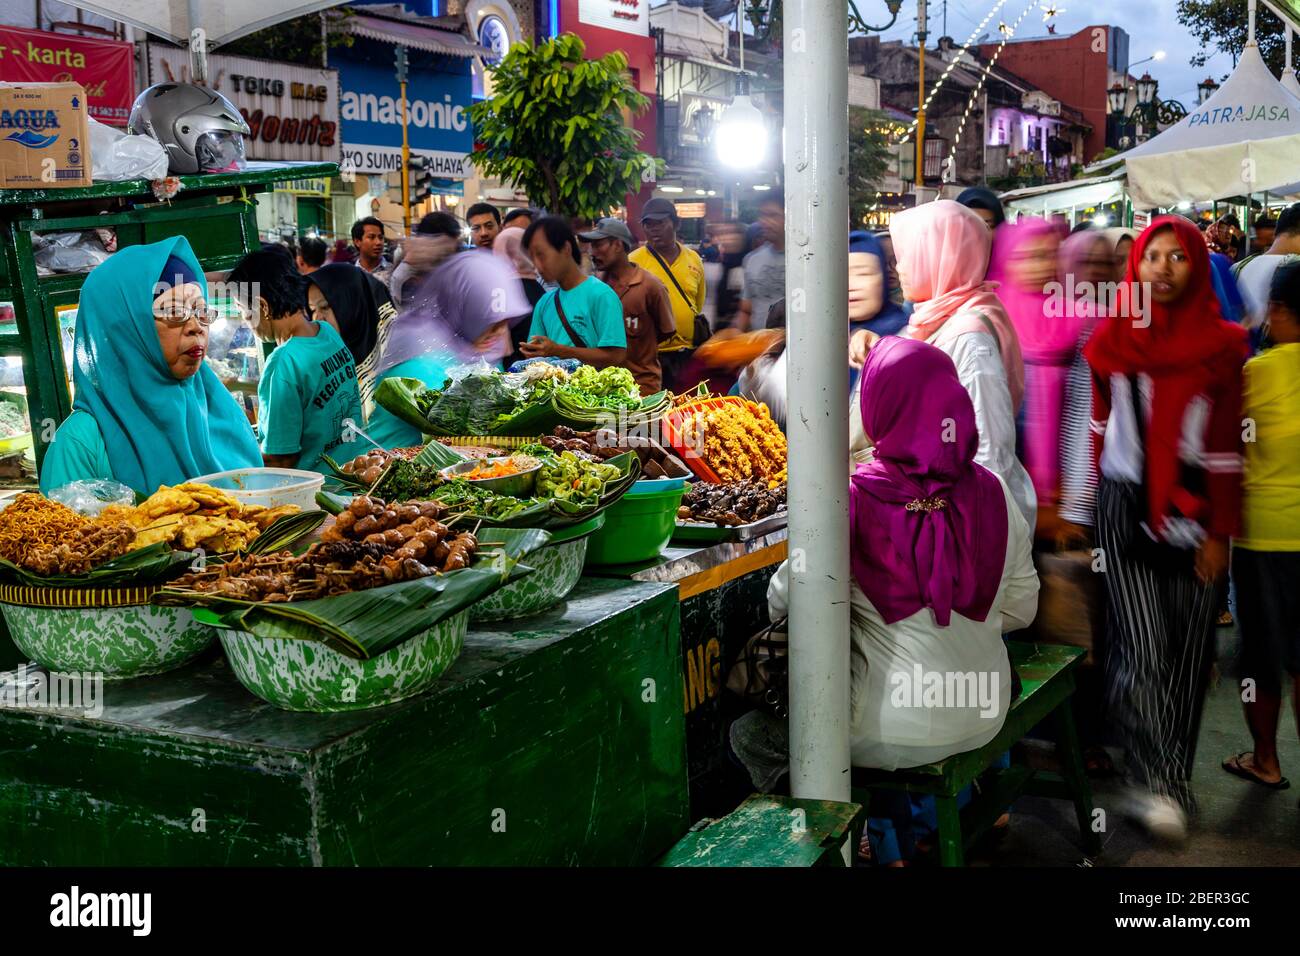 Ein farbenfroher Street Food-Stand im Nachtmarkt, Malioboro Street, Yogyakarta, Indonesien. Stockfoto